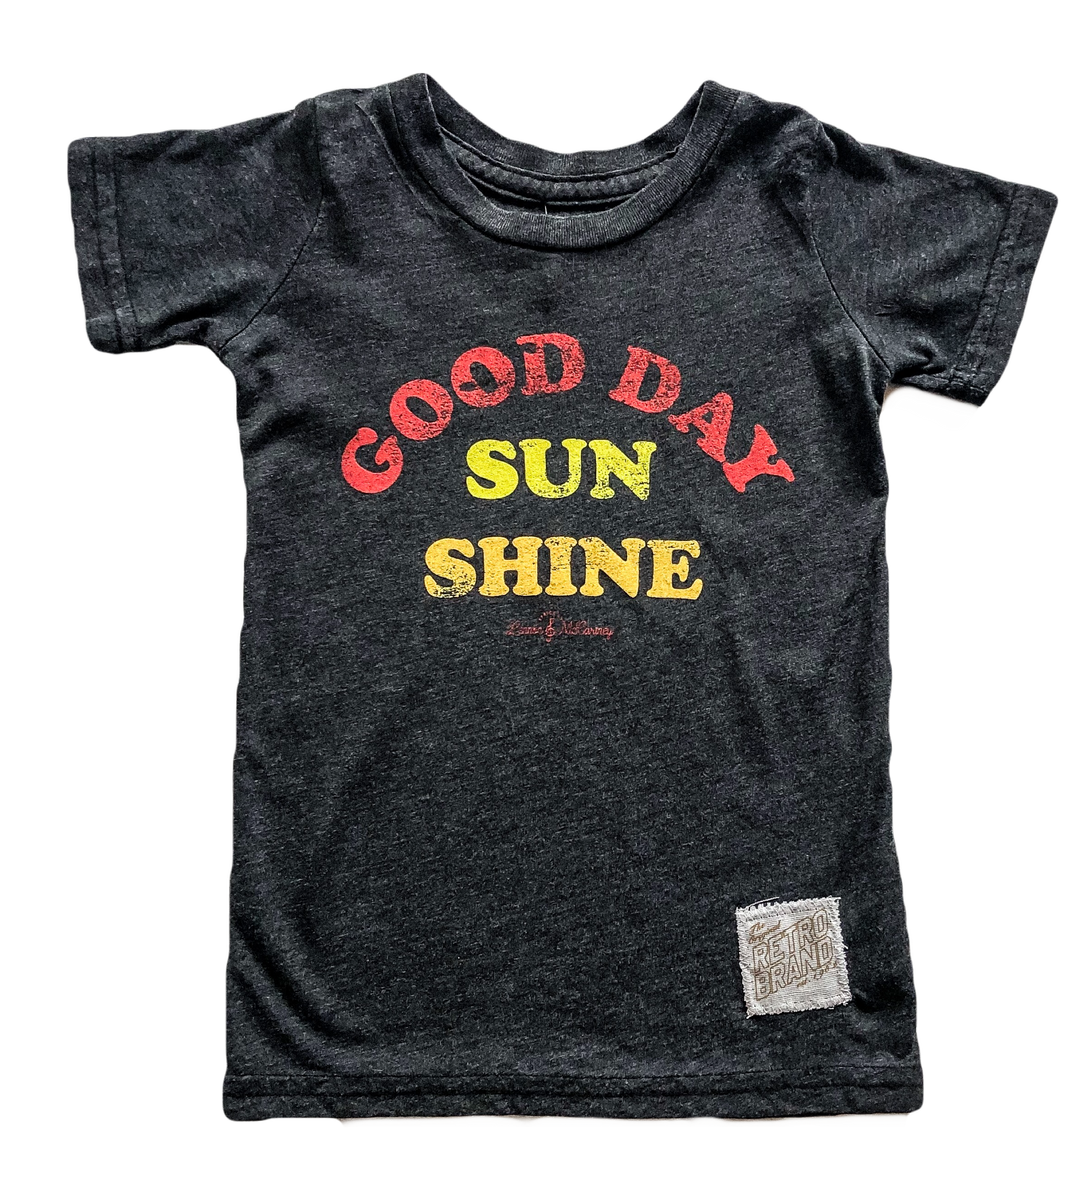 Retro Brand - Good Day Sunshine Tee in Vintage Black